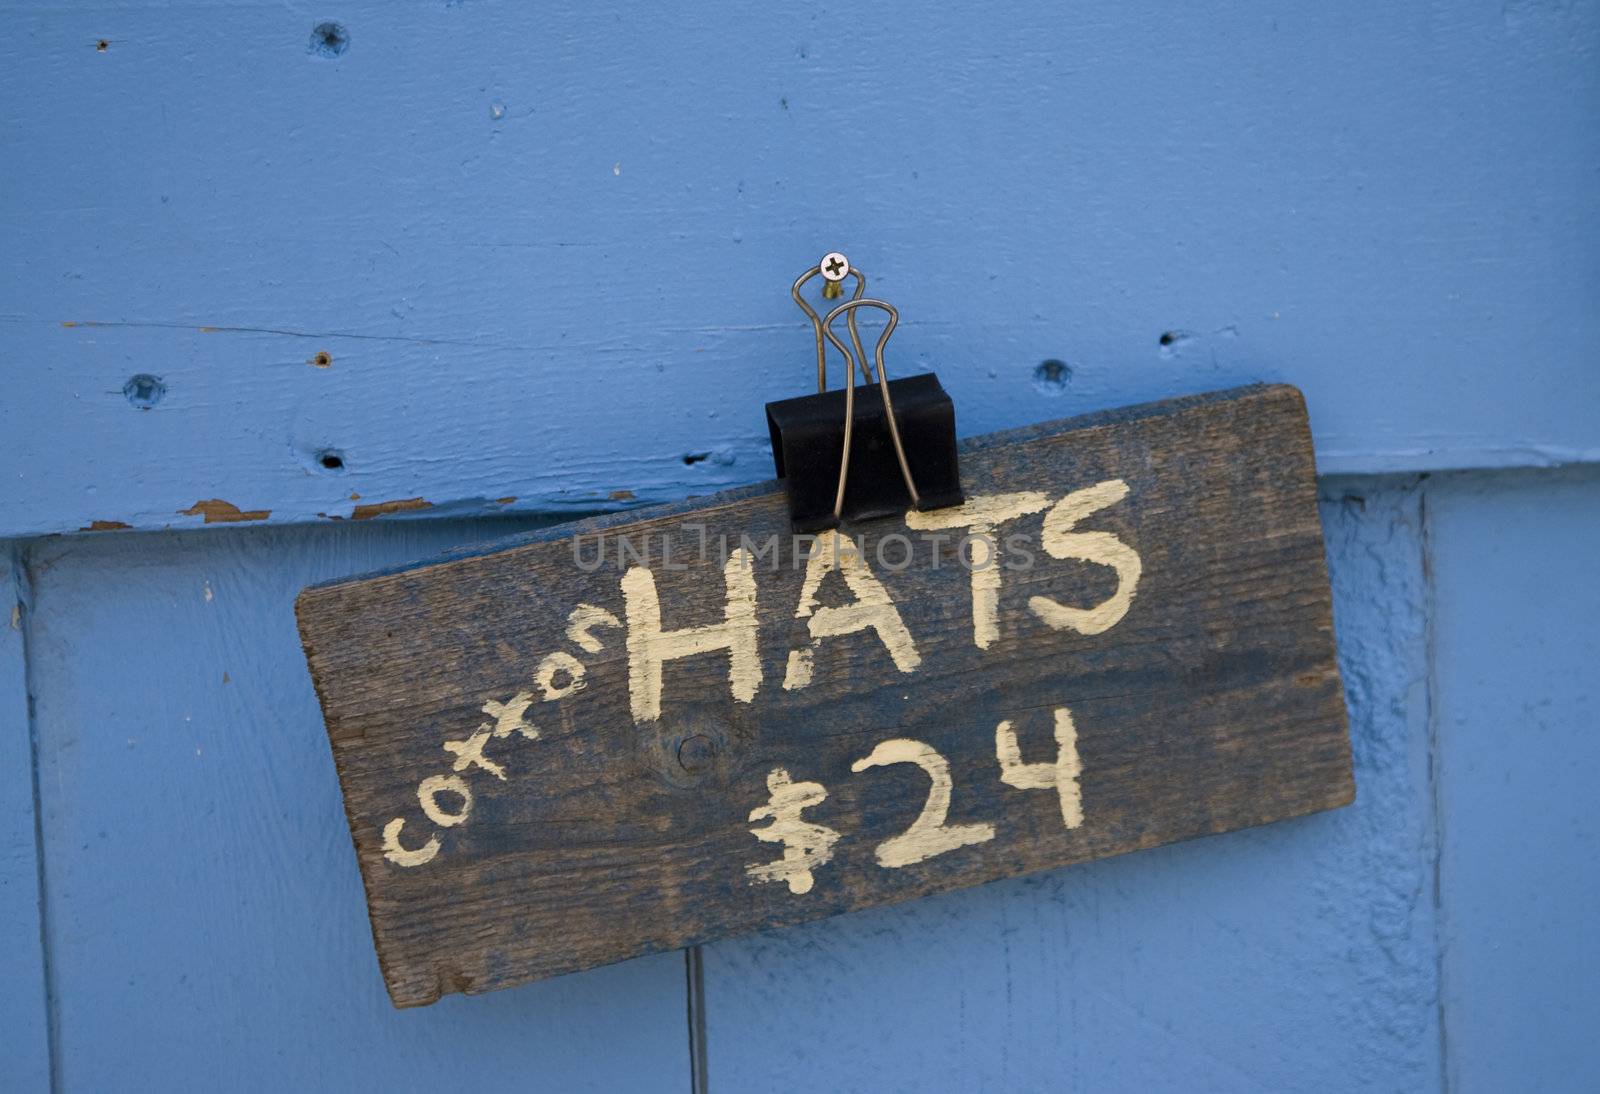 Hats for Sale by patballard